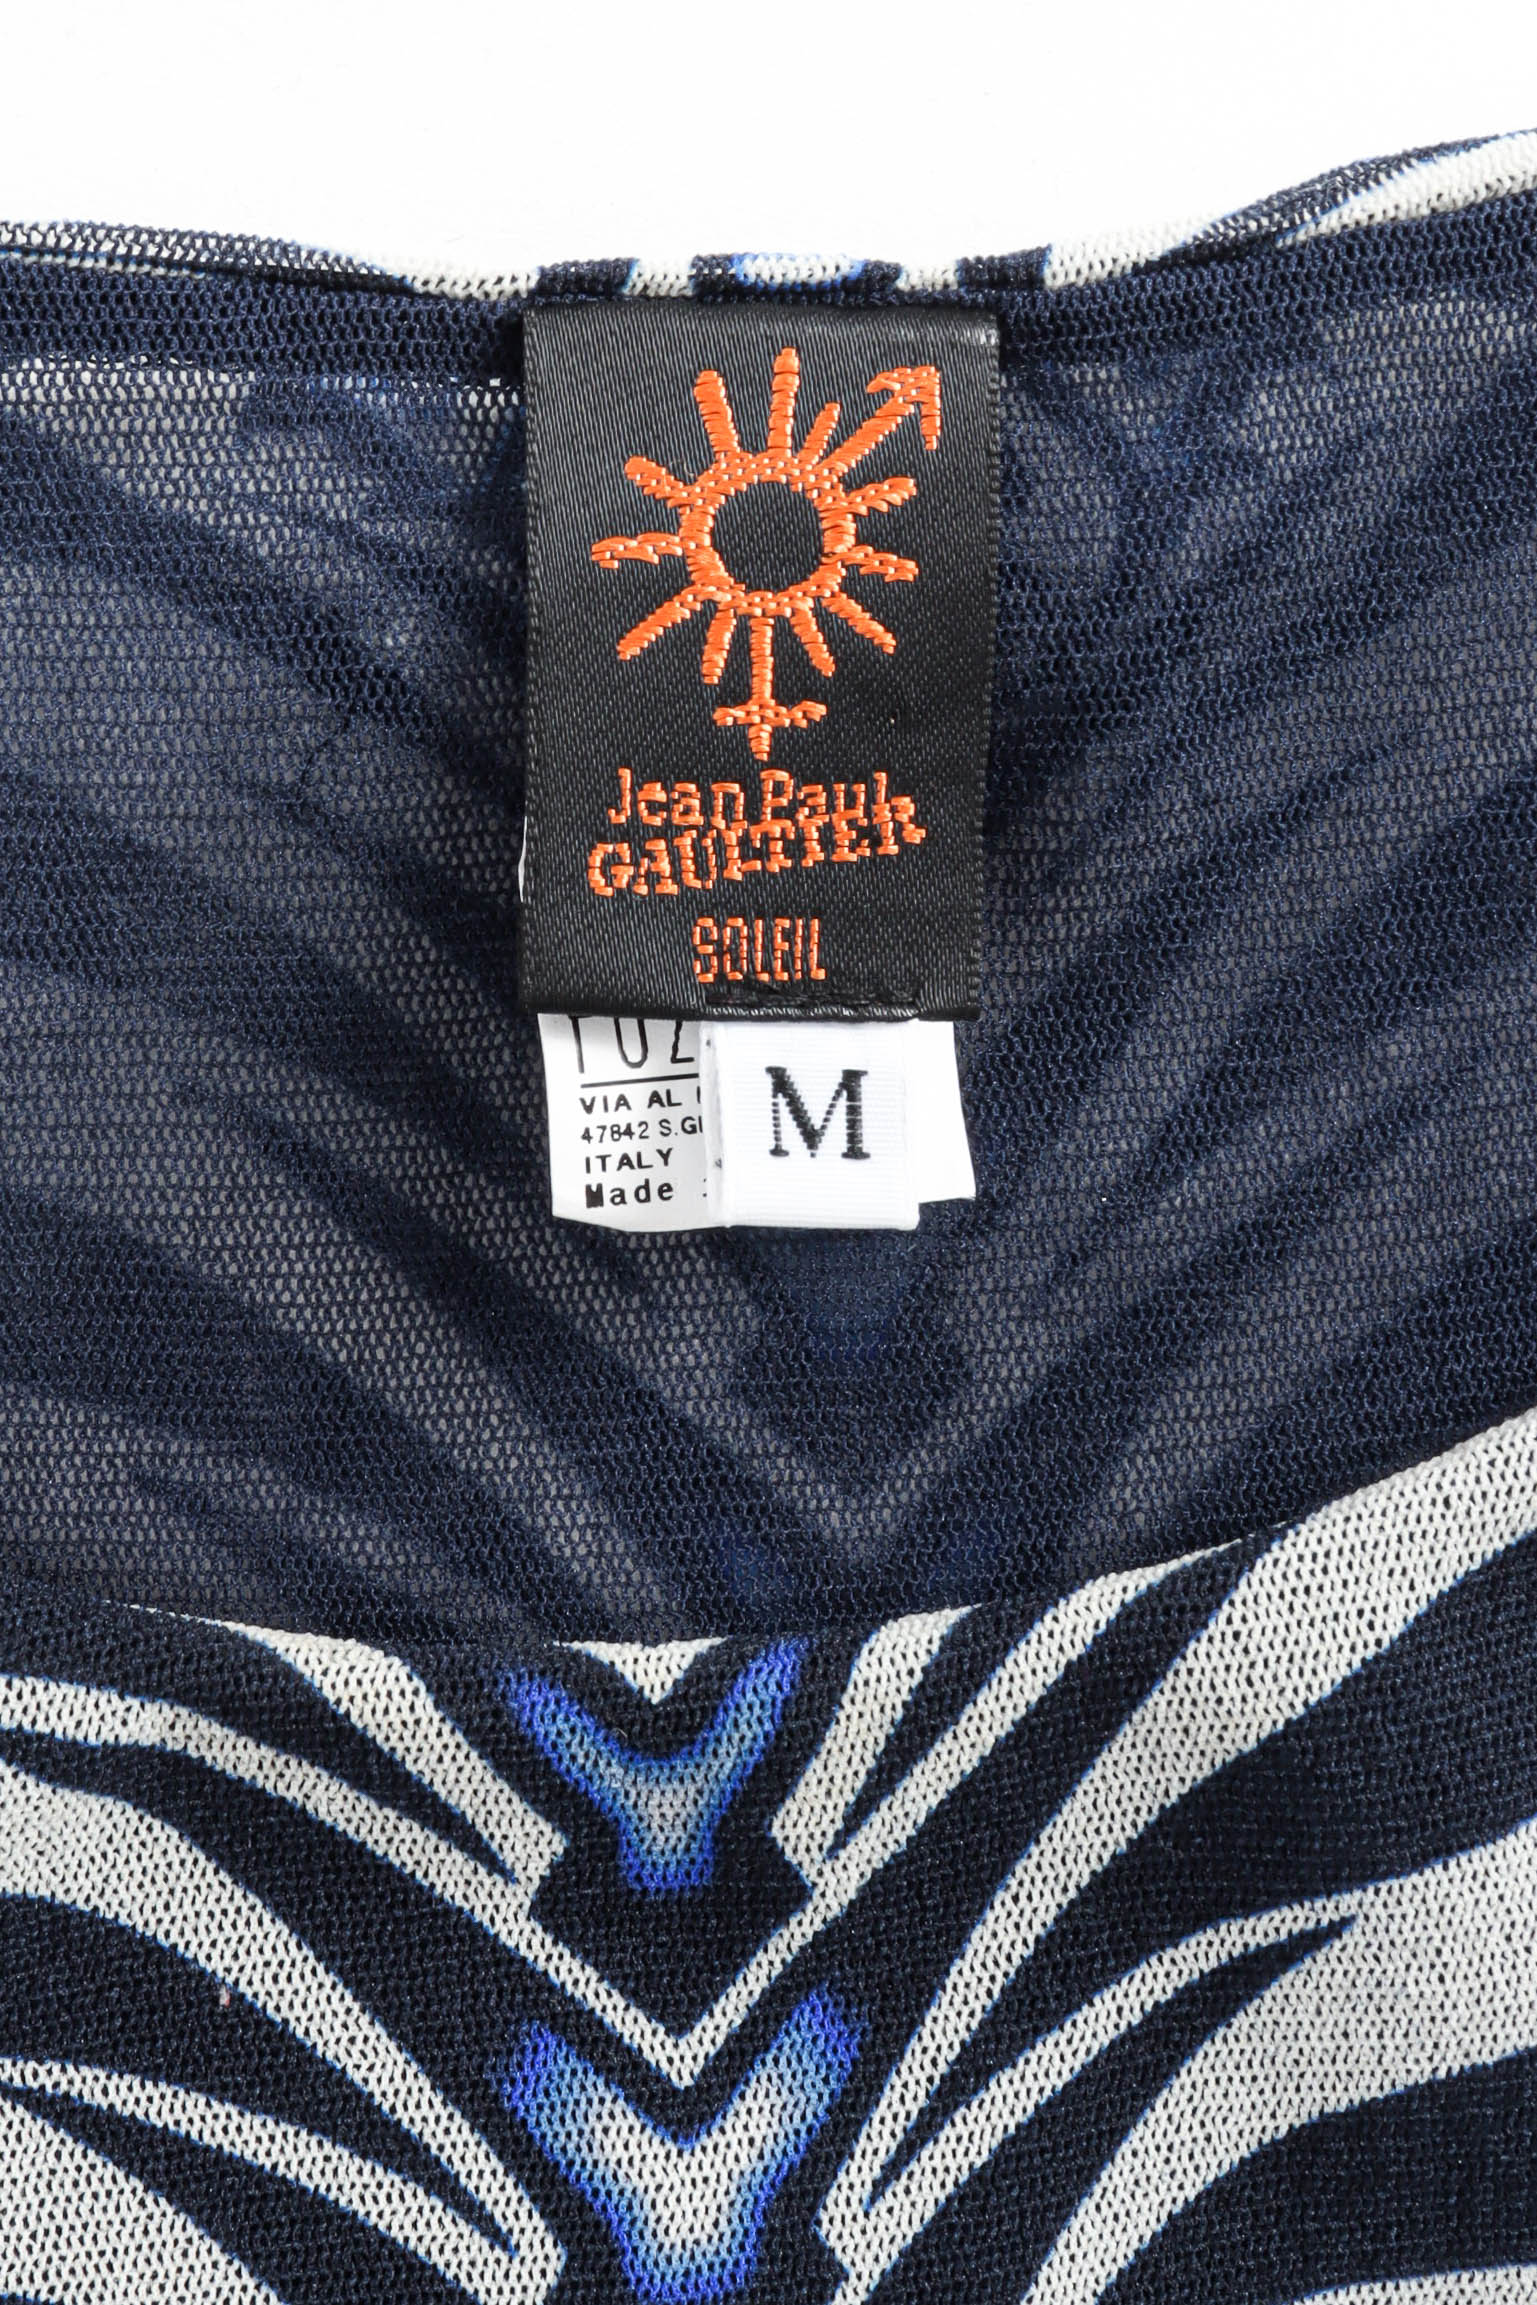 Vintage Jean Paul Gaultier Soleil Mesh Tribal Print Top tag @ Recess LA